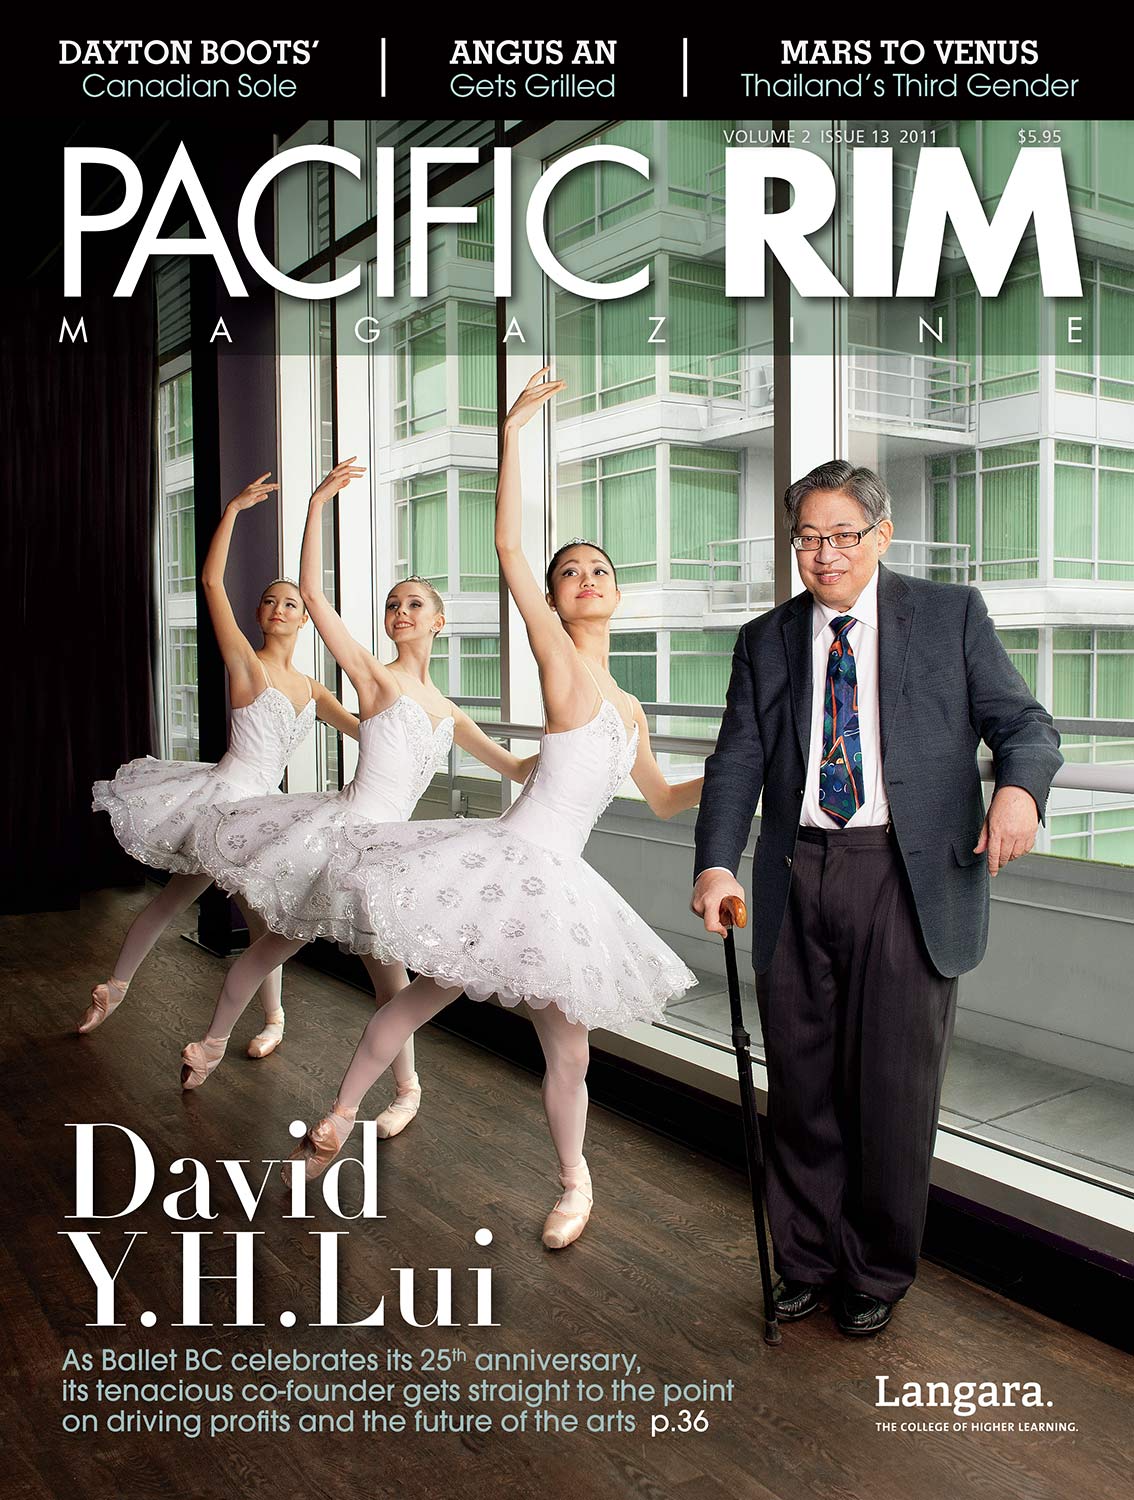 2011 Cover of Pacific Rim. Image of David Y.H. Lui and three ballerinas.